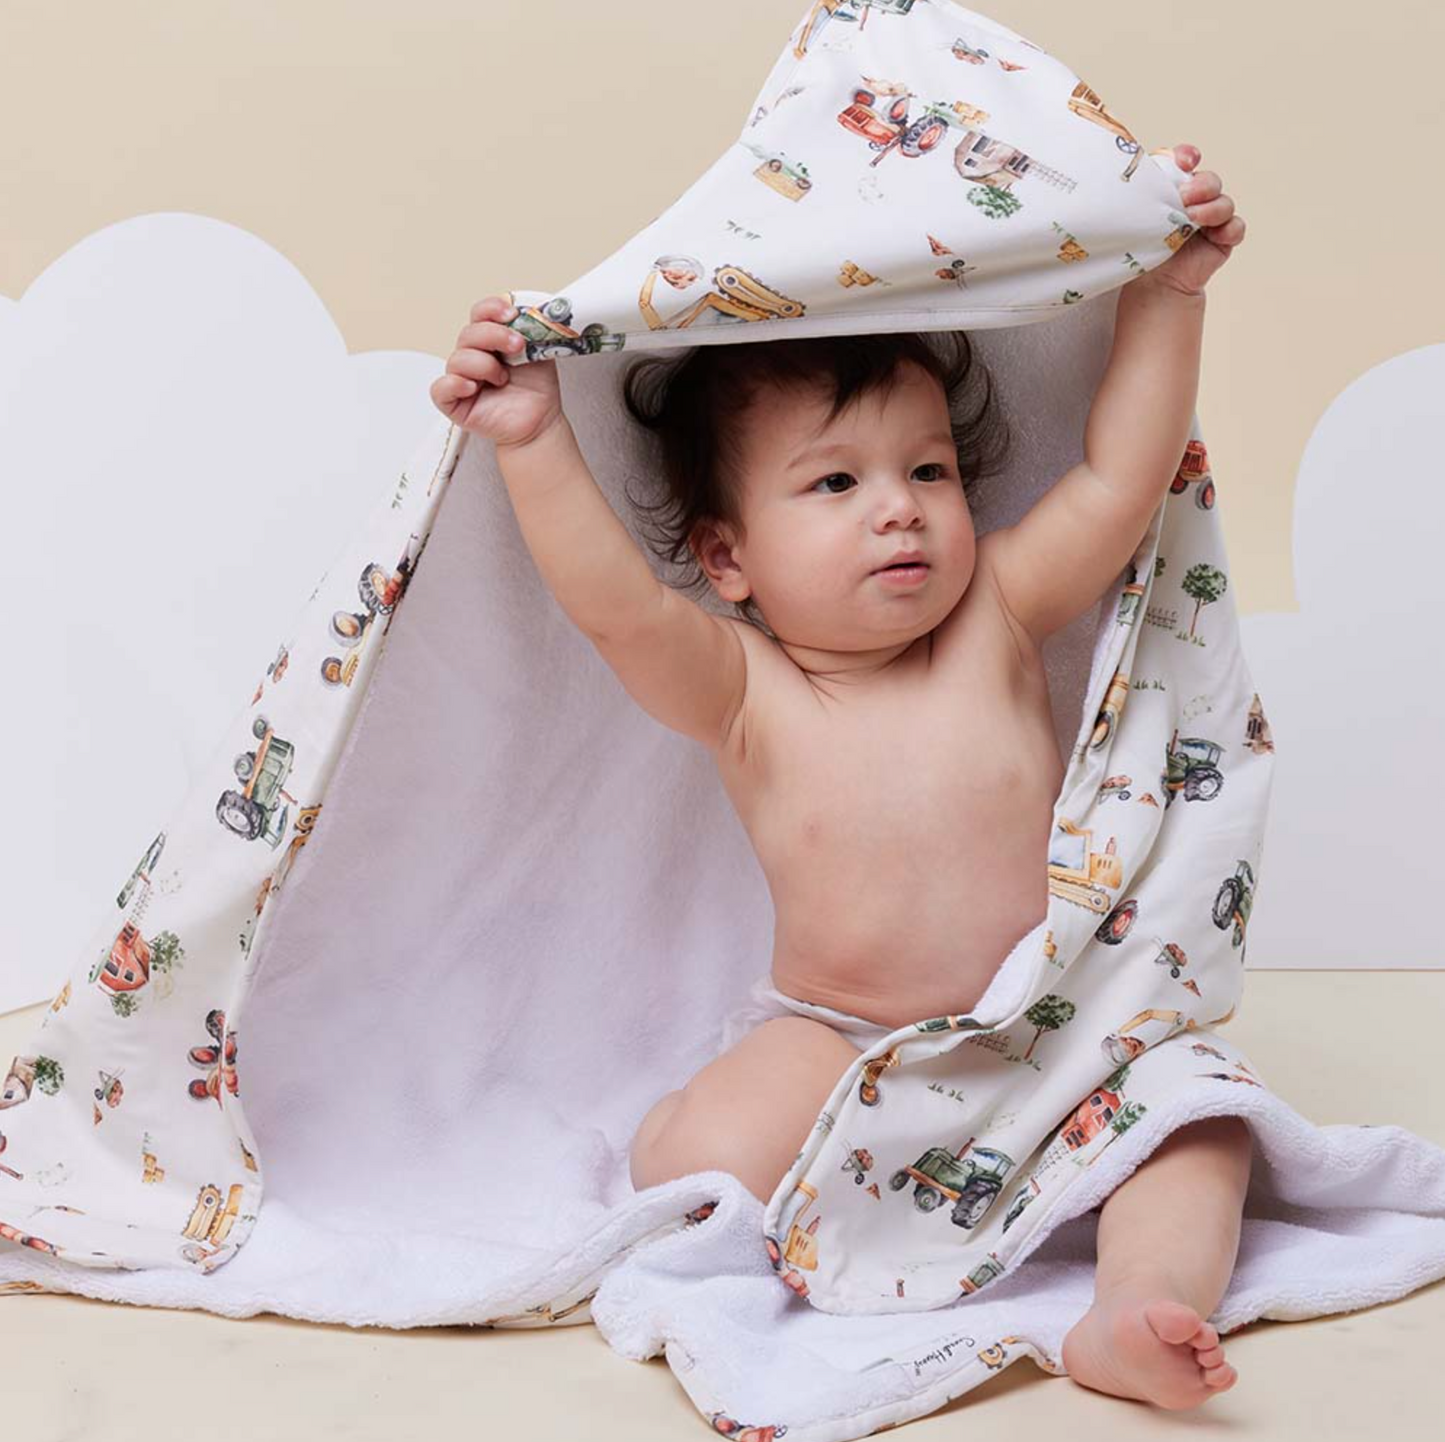 Diggers Organic Hooded Baby Towel